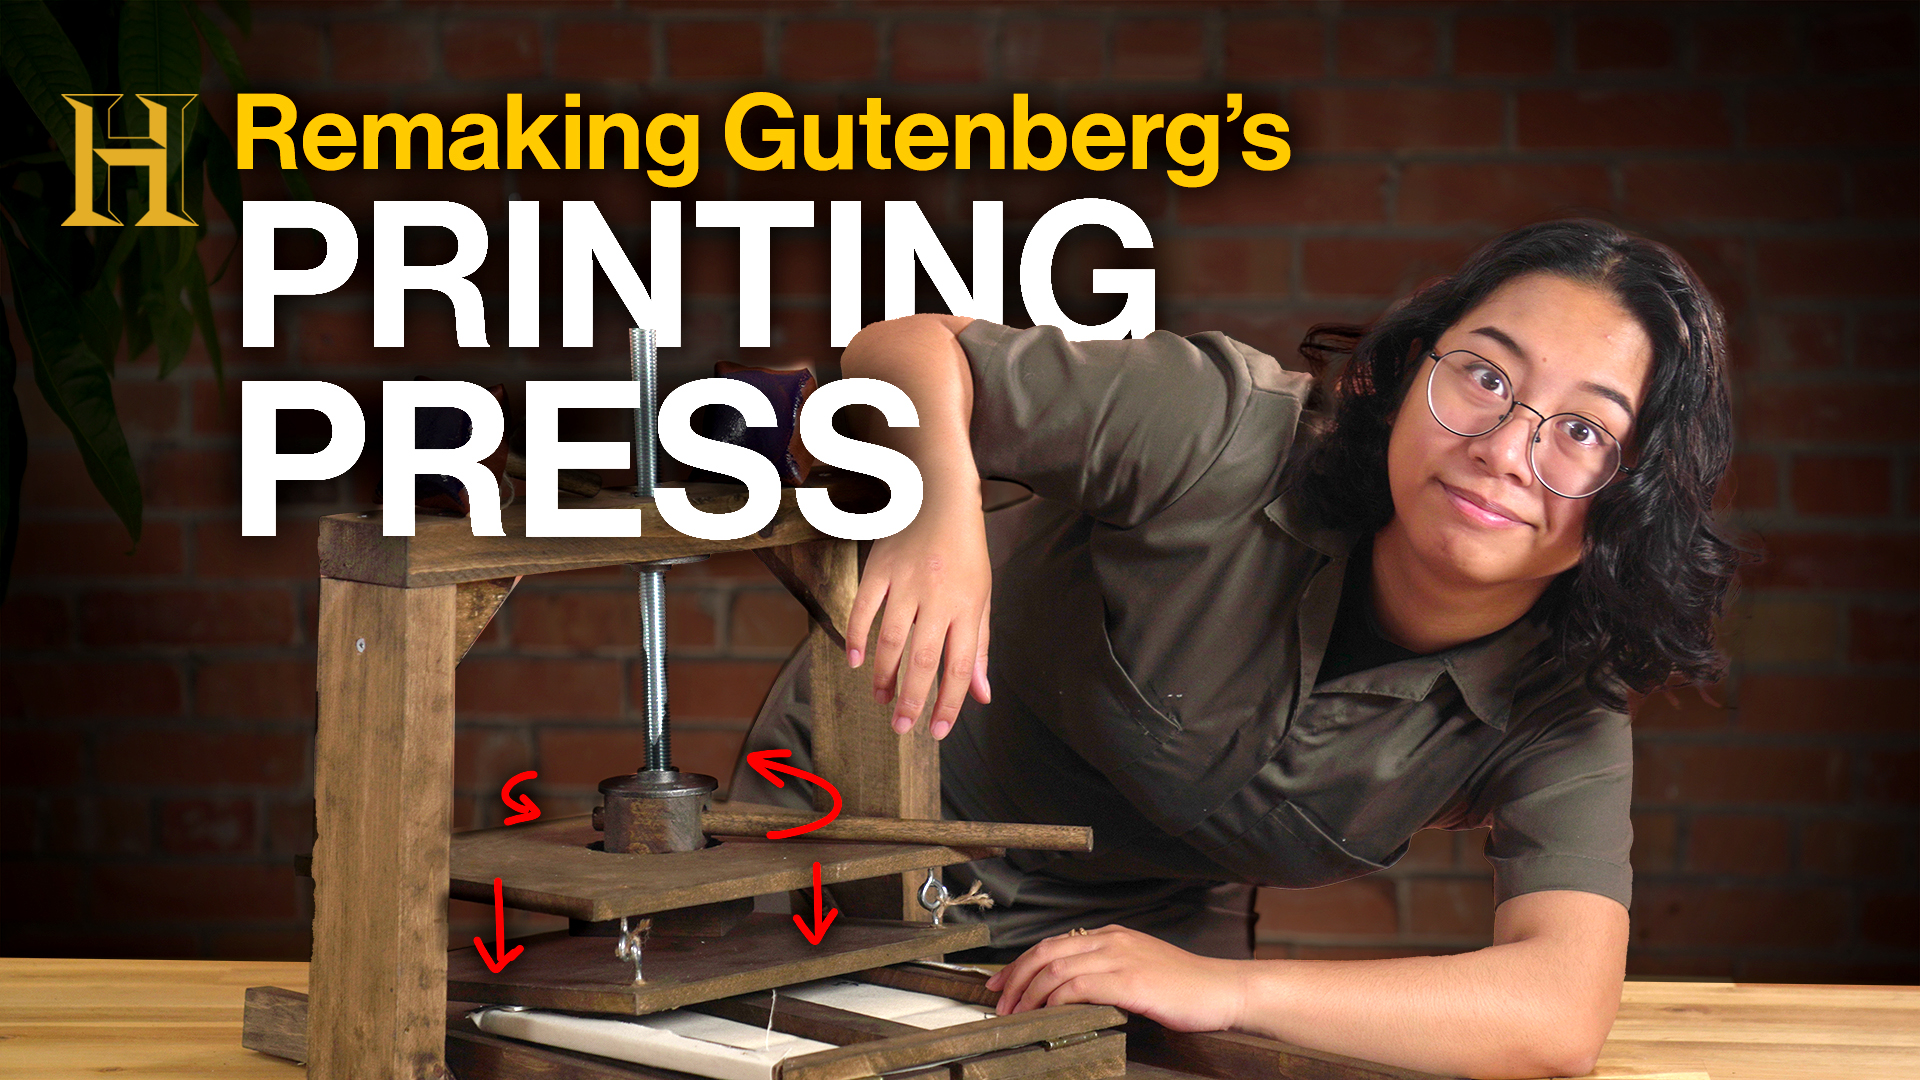 Is Gutenberg’s Printing Press Still Useful?